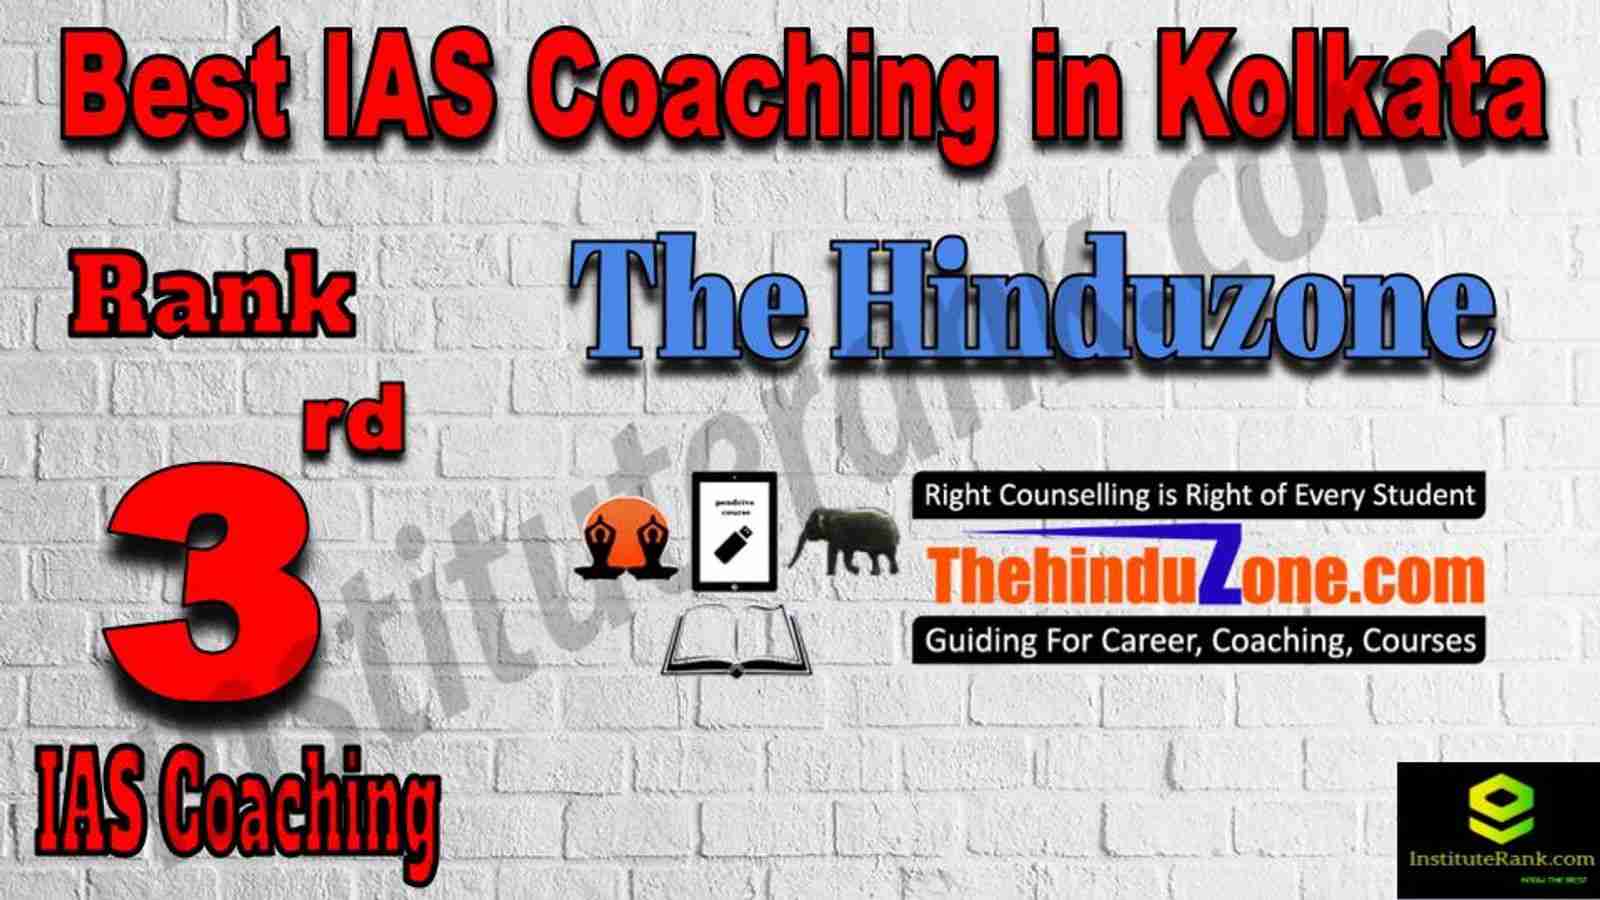 3rd Best IAS Coaching in Kolkata